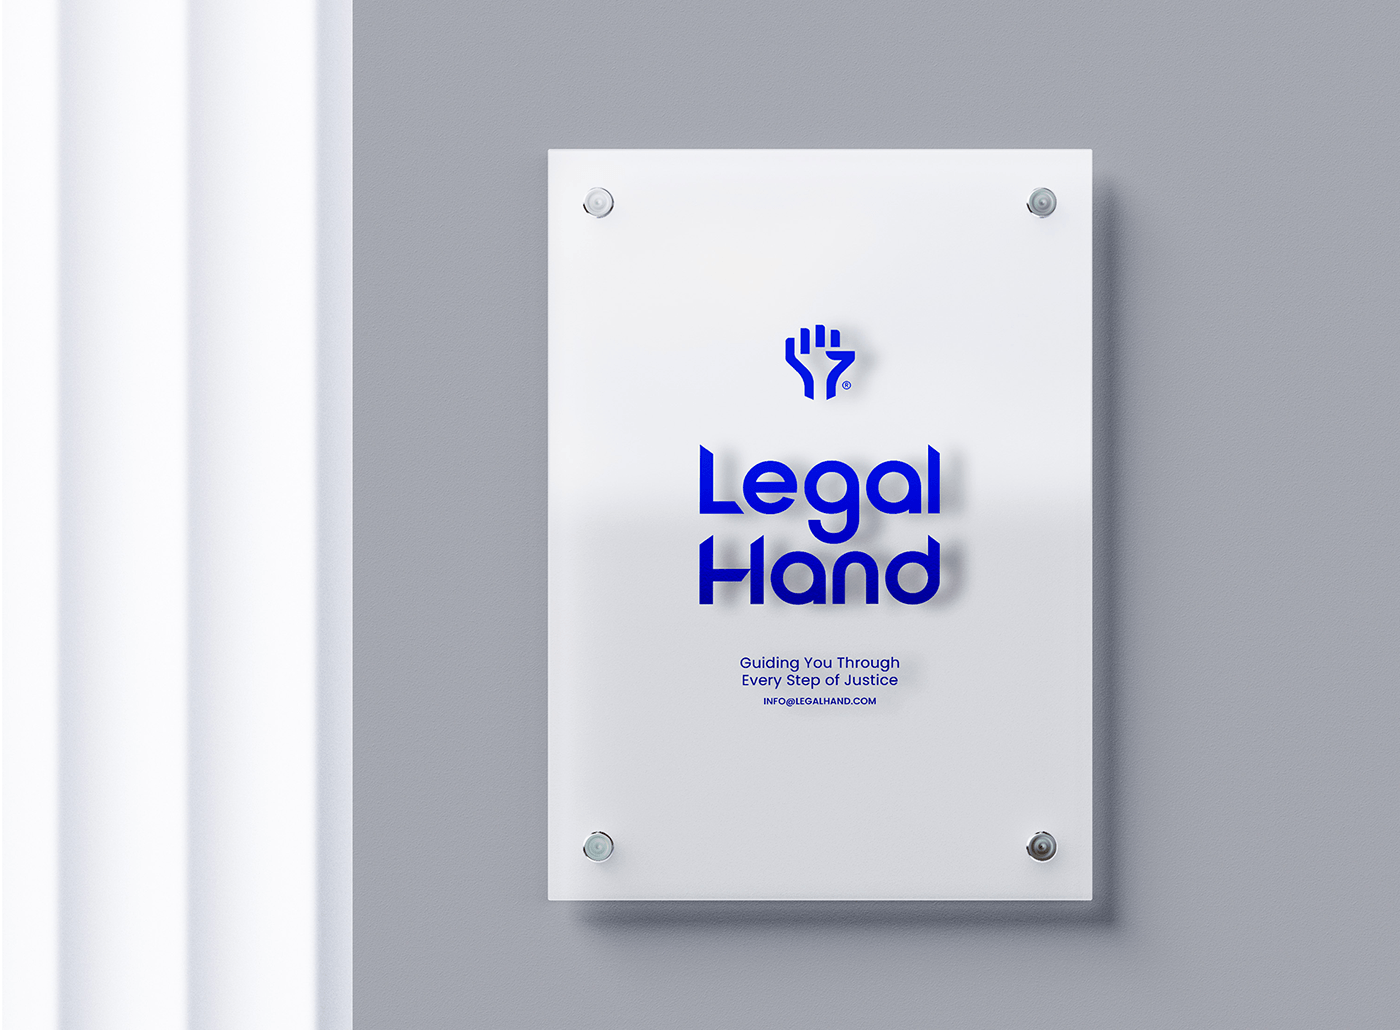 law firm Logo Design brand identity logo branding  Brand Design lawyer visual identity legal services law